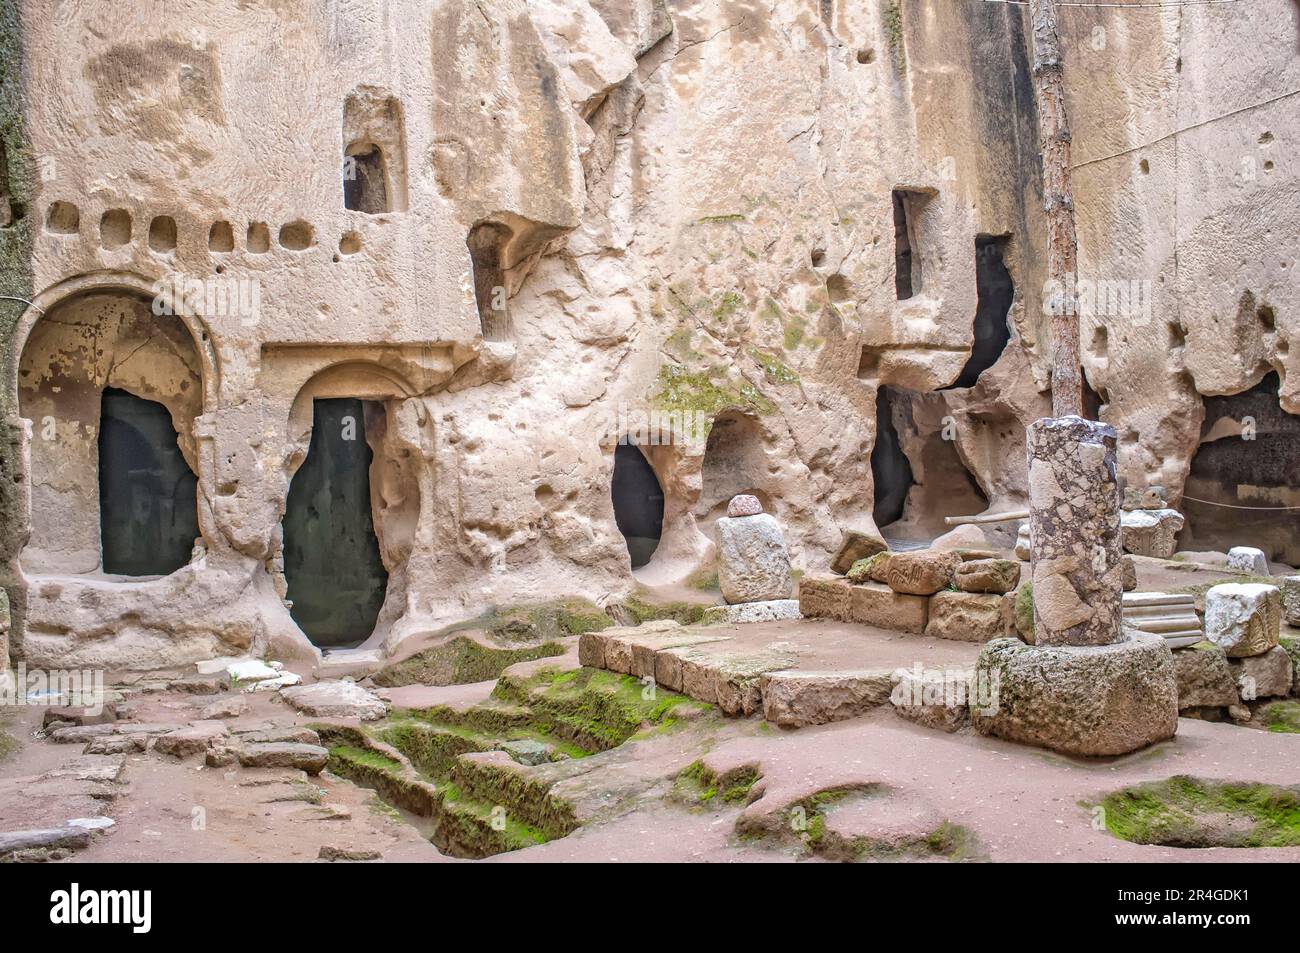 Inner courtyard, cave monastery, church, Guemuesler, Nigde province, Turkey Stock Photo